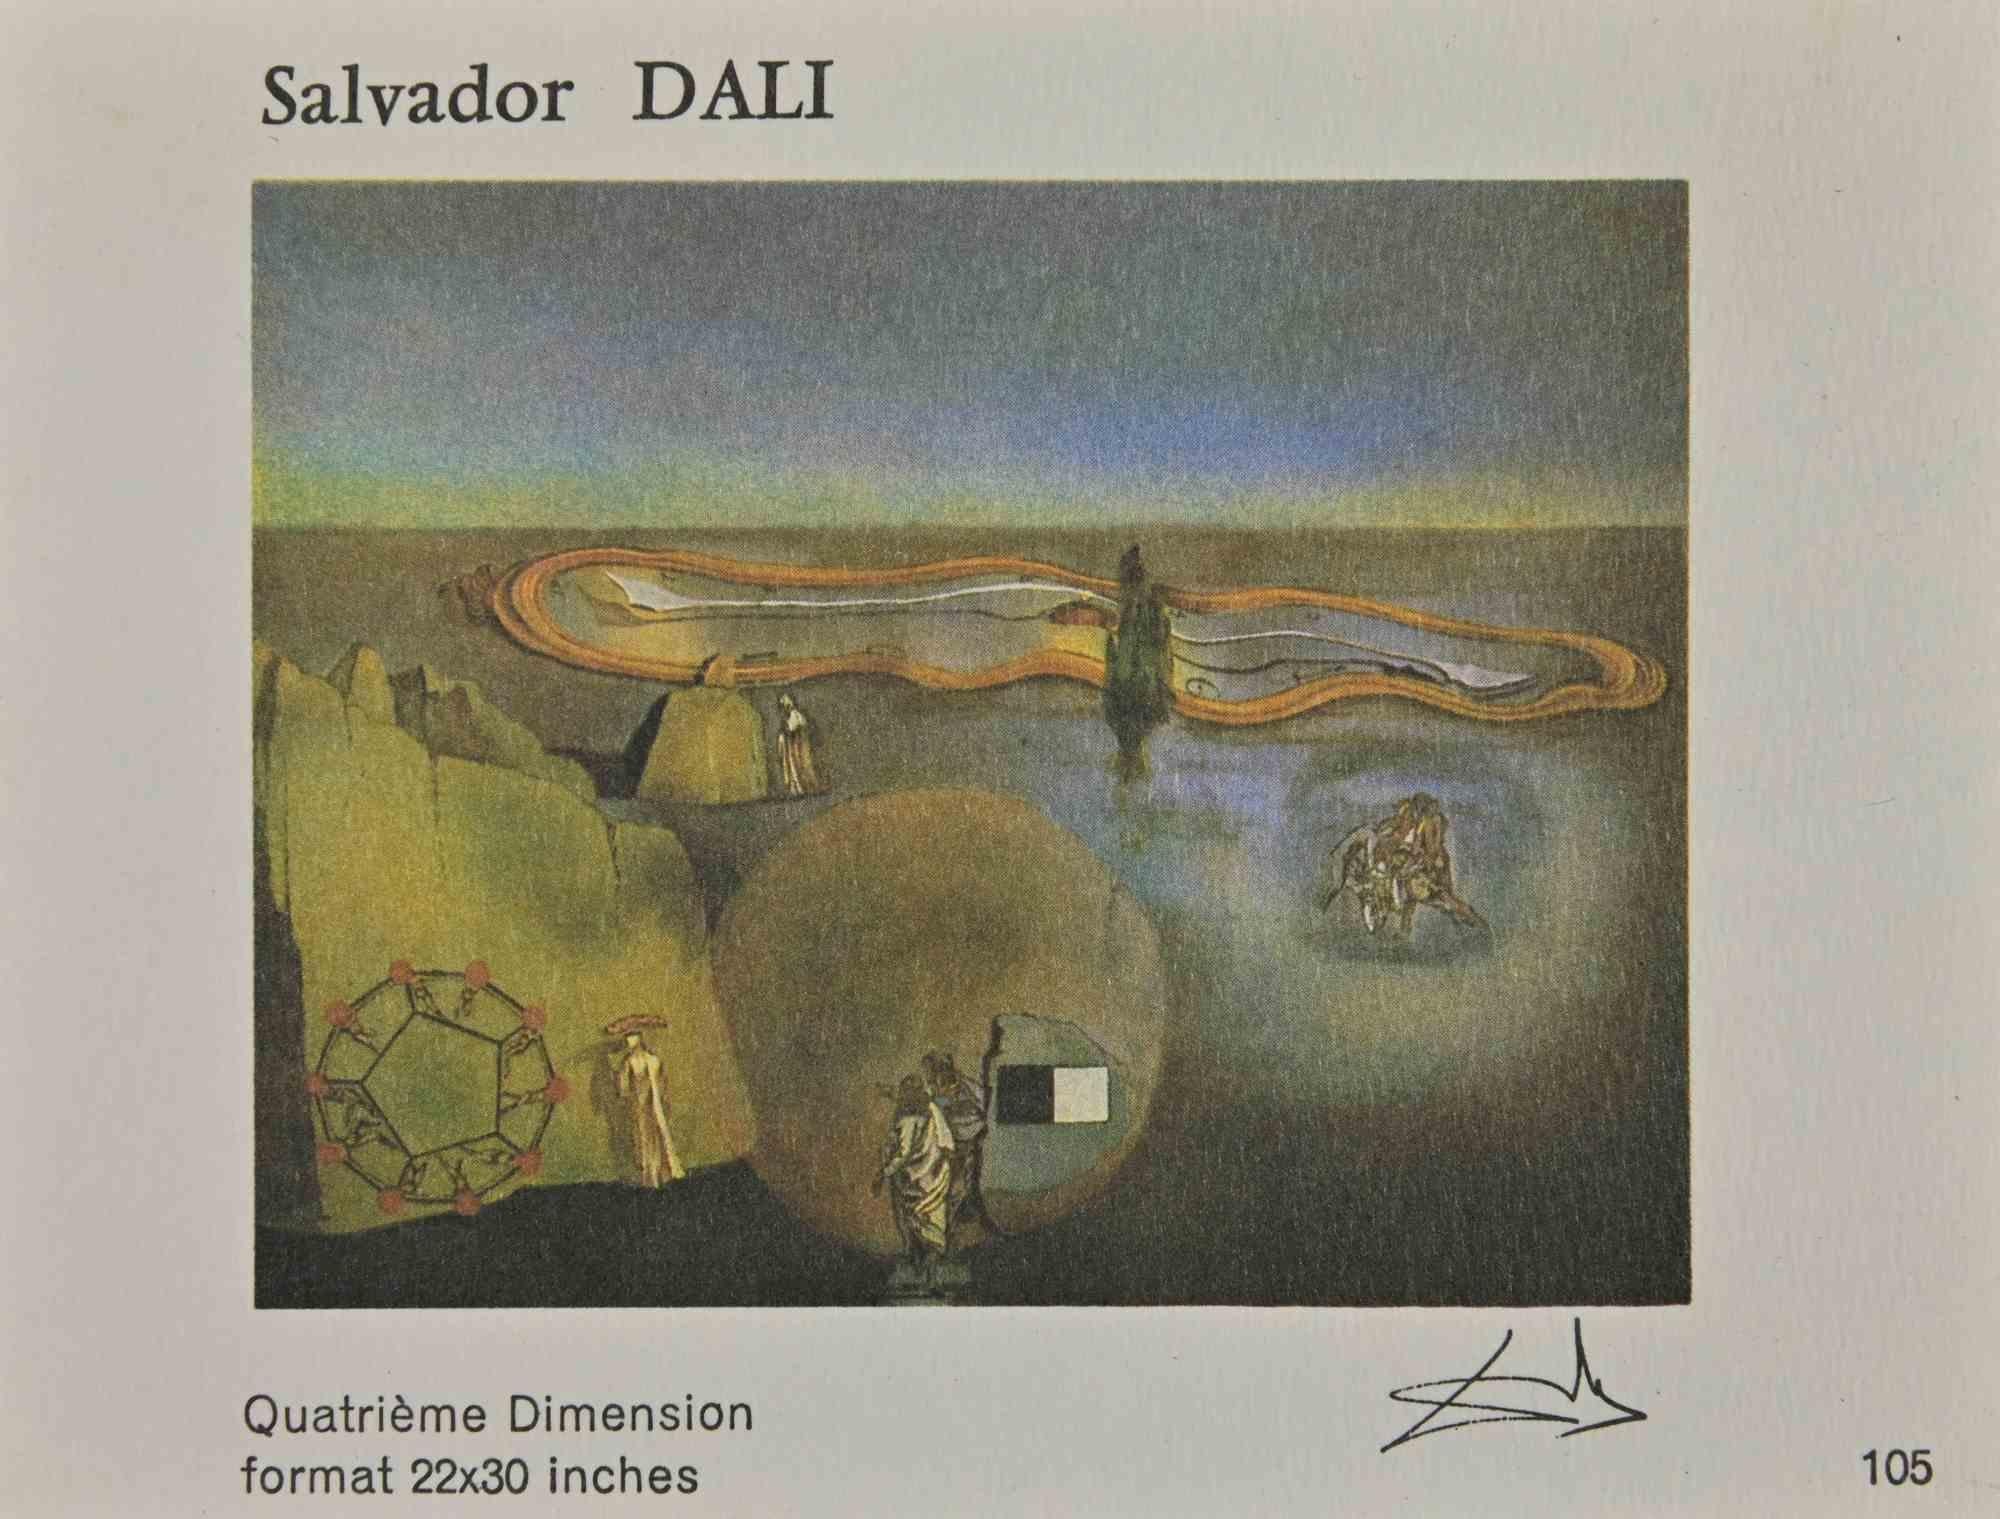 Collection of Vintage Cards After Salvador Dalì - 1980s For Sale 9